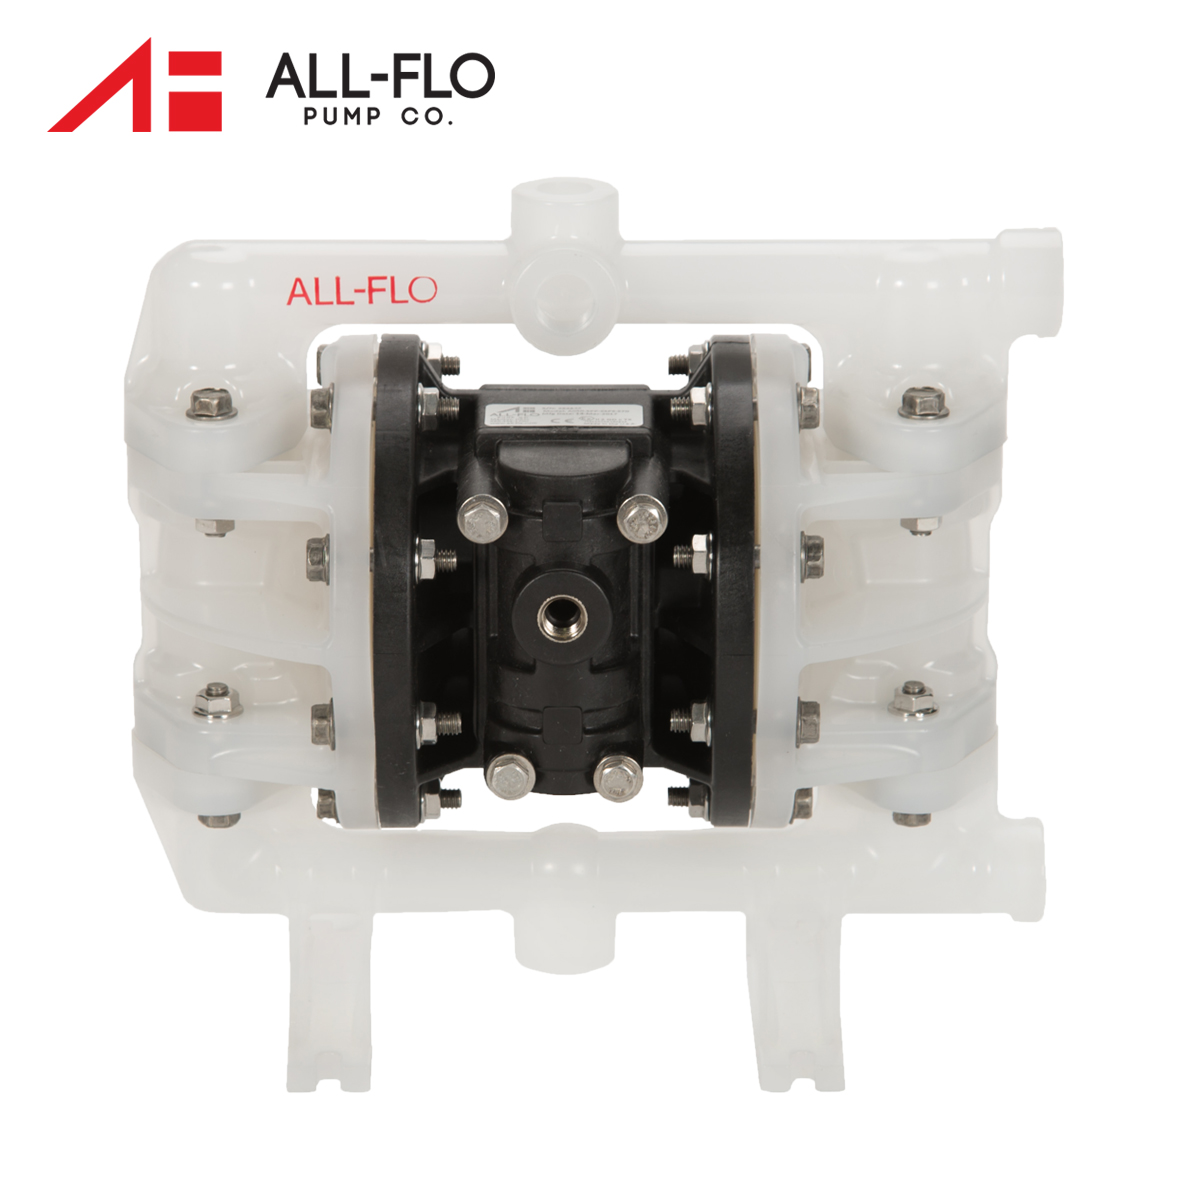 ALL-FLO 美国奥弗气动泵 塑料隔膜泵 气动隔膜泵 化工泵 耐腐蚀泵 A050